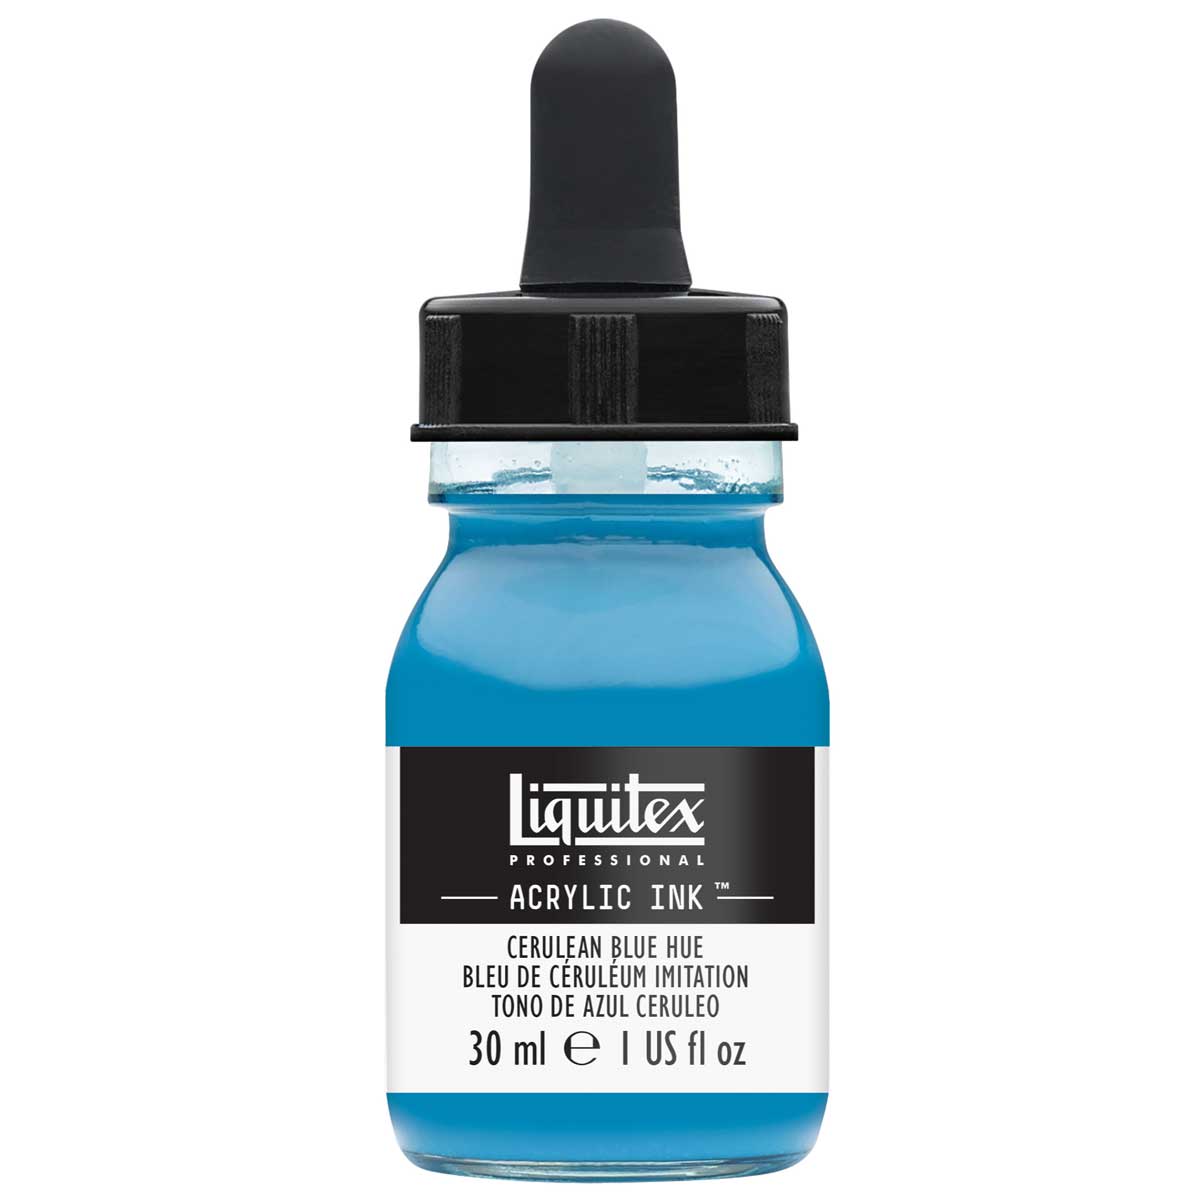 Liquitex Professional Acrylic Ink - Cerulean Blue Hue 30ml/1oz